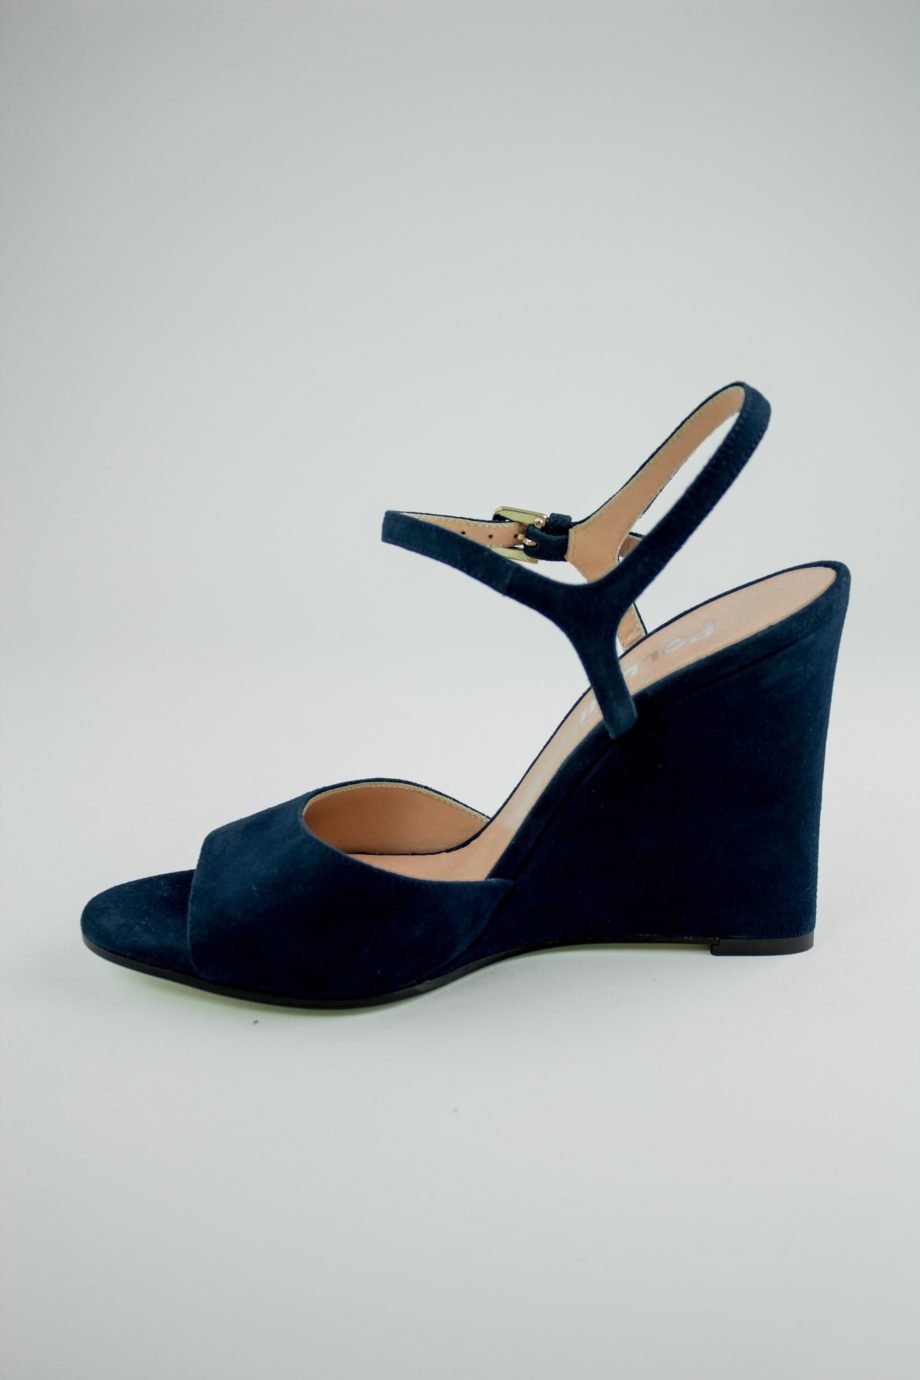 25. POLLINI Blue wedge heels